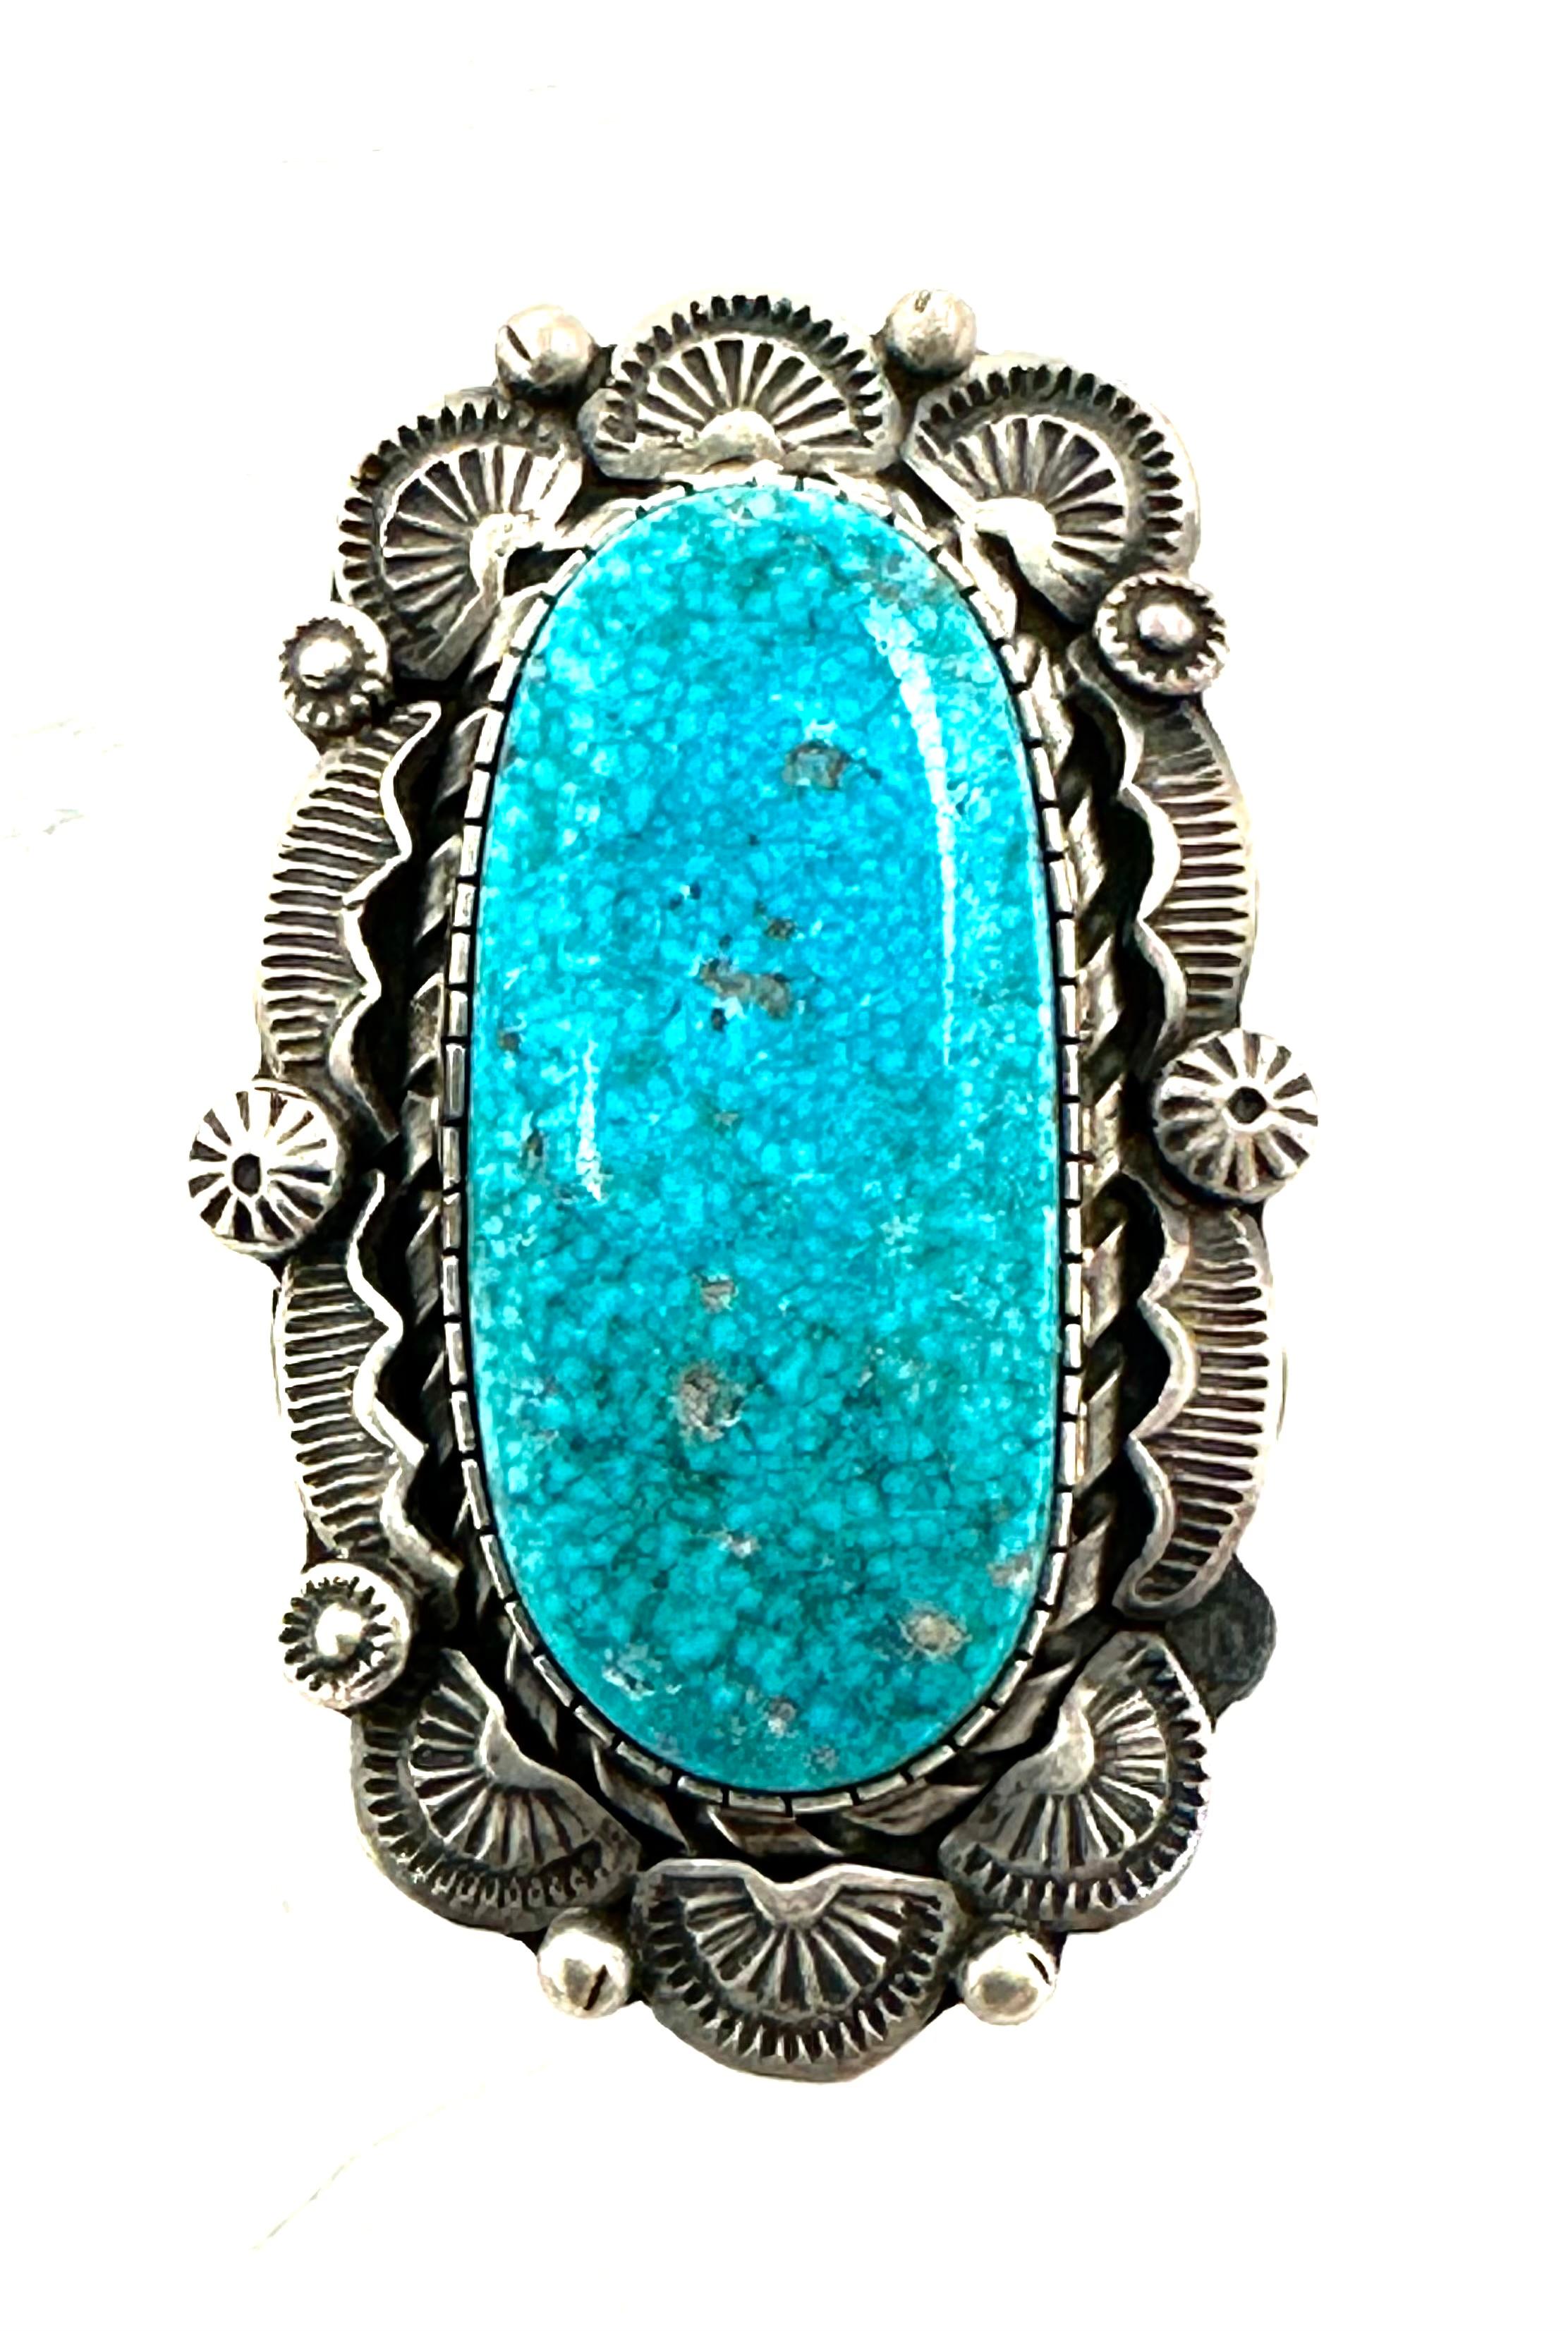 Bague en argent sterling .925 Kingman Turquoise Navajo Made Ring By Betta Lee .
Mesure environ 2